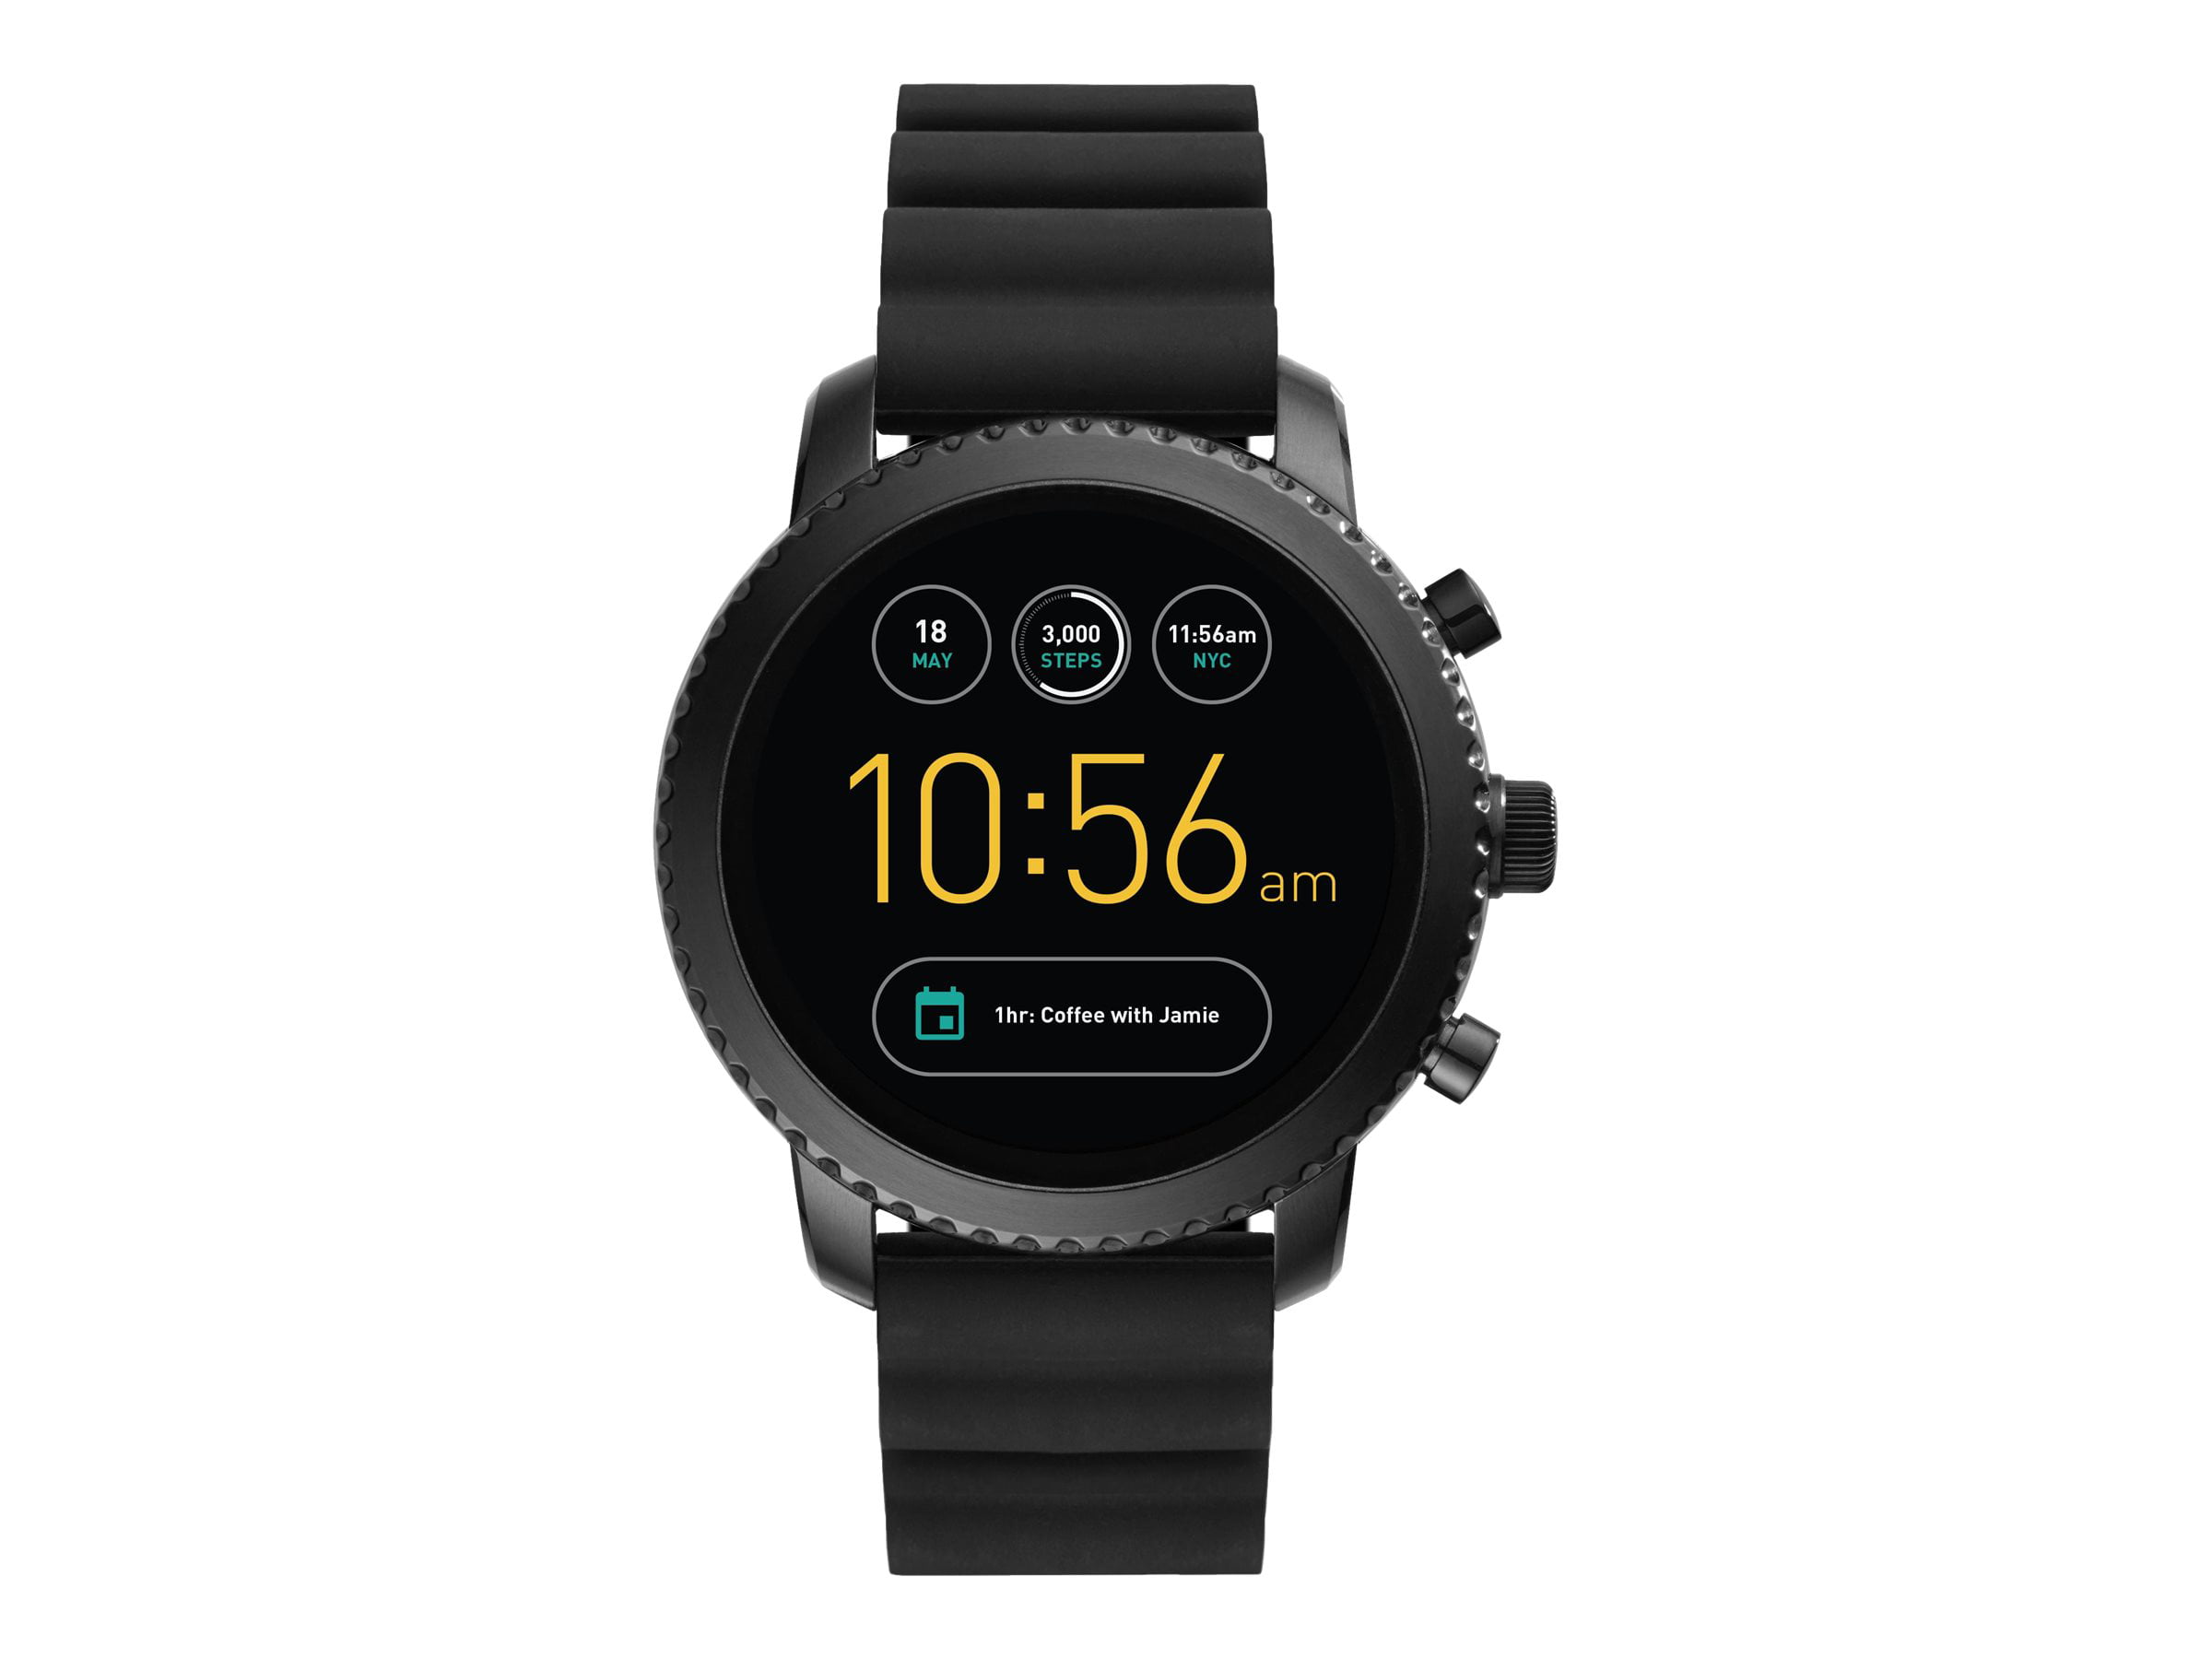 Uddrag Rekvisitter Gutter Fossil Q Explorist Gen 3 - 46 mm - black - smart watch with strap -  silicone - black - 4 GB - Wi-Fi, Bluetooth - Walmart.com